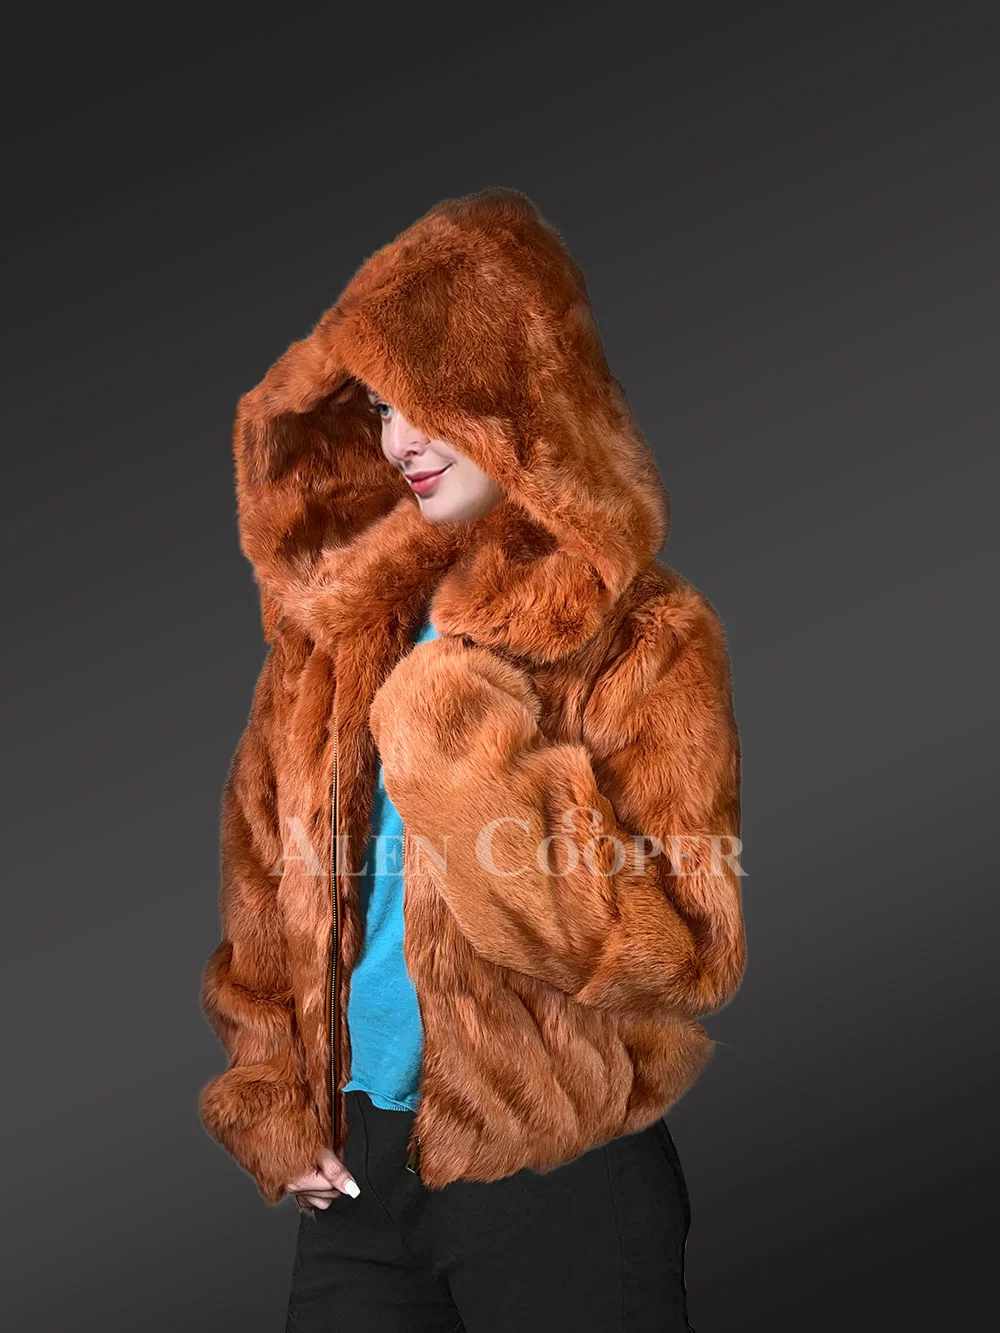 Andorine faux fur bomber jacket - Orange